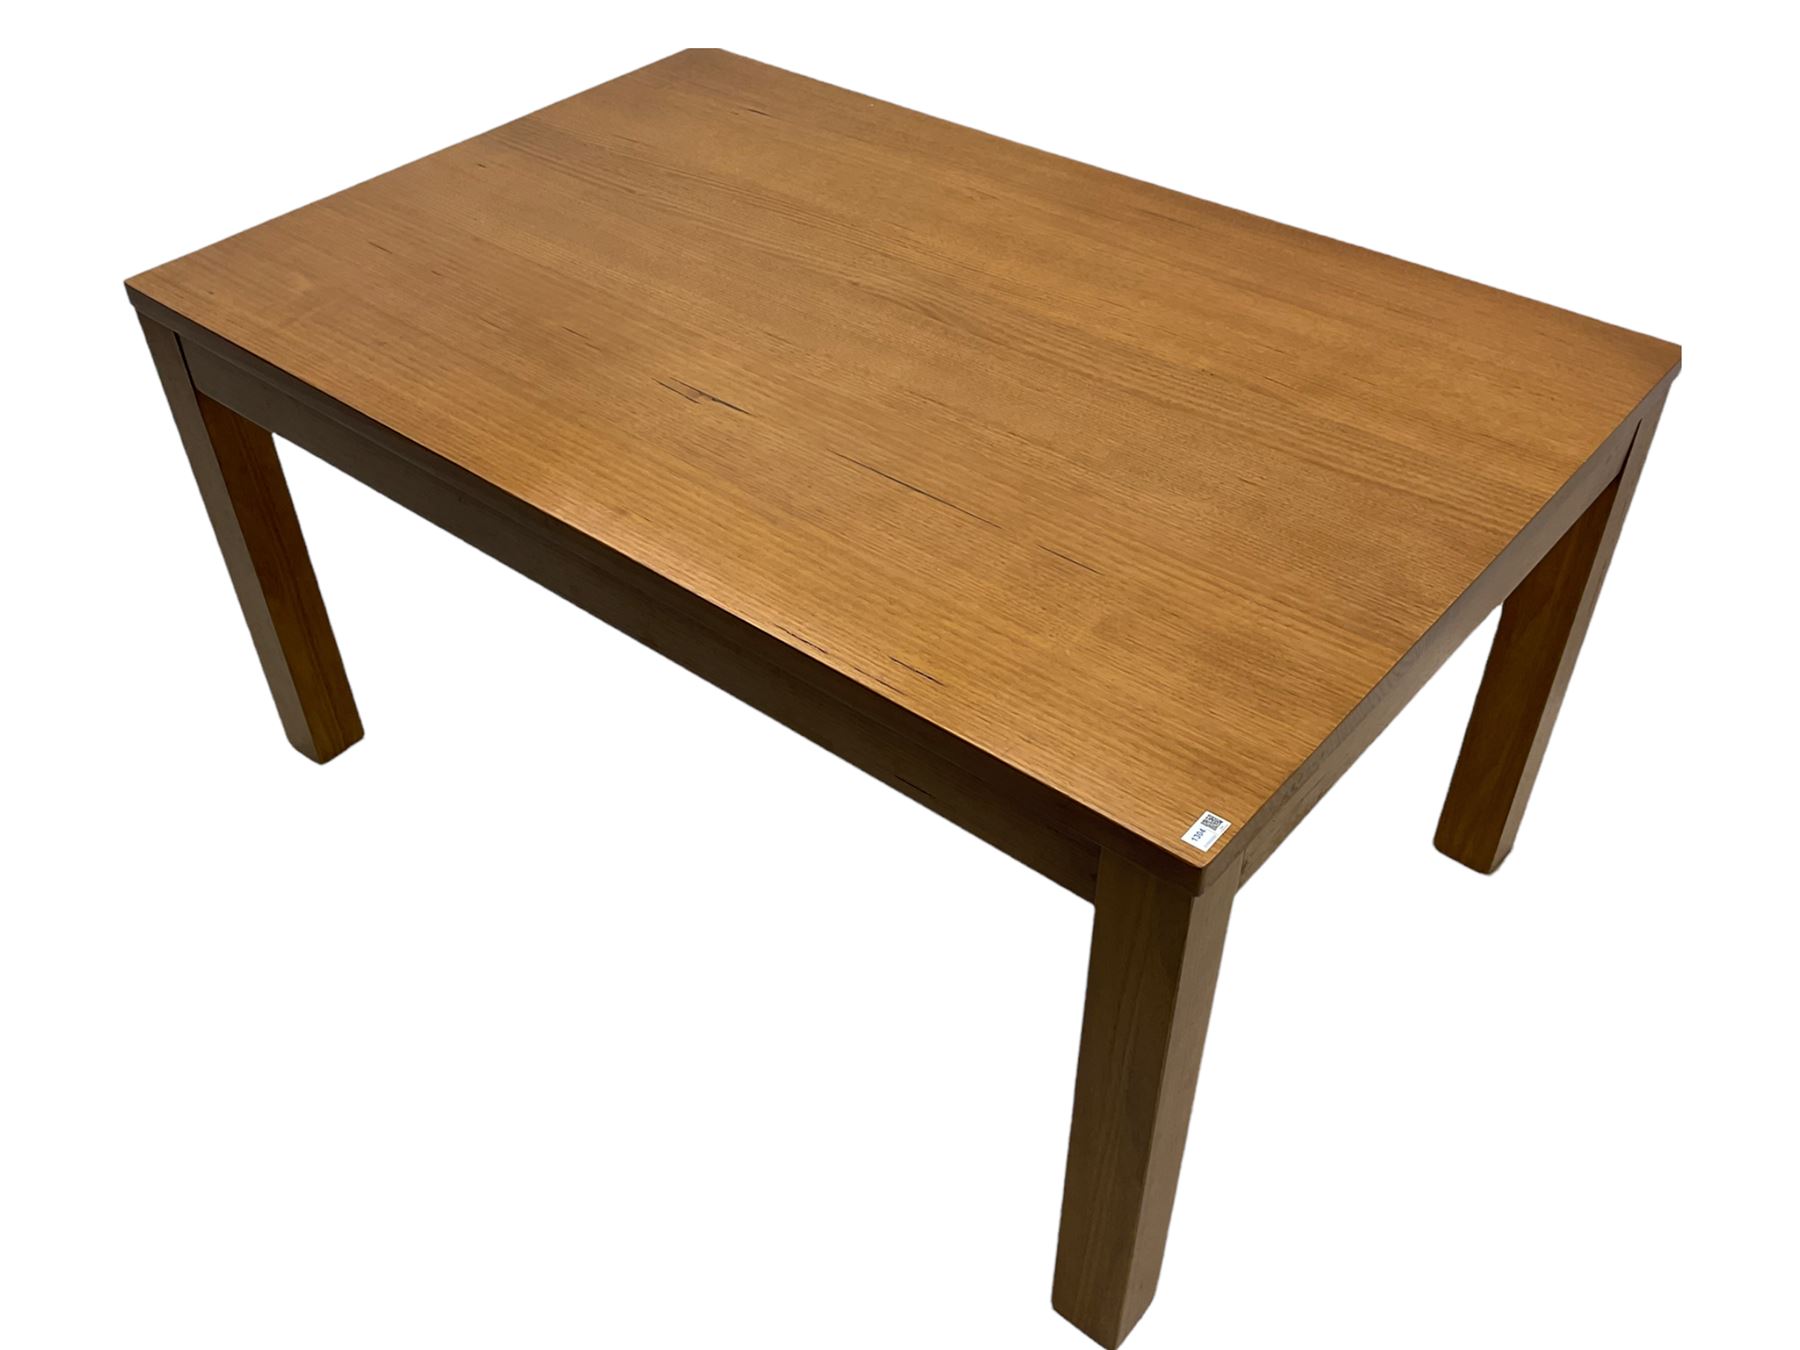 Light oak rectangular dining table - Image 5 of 5